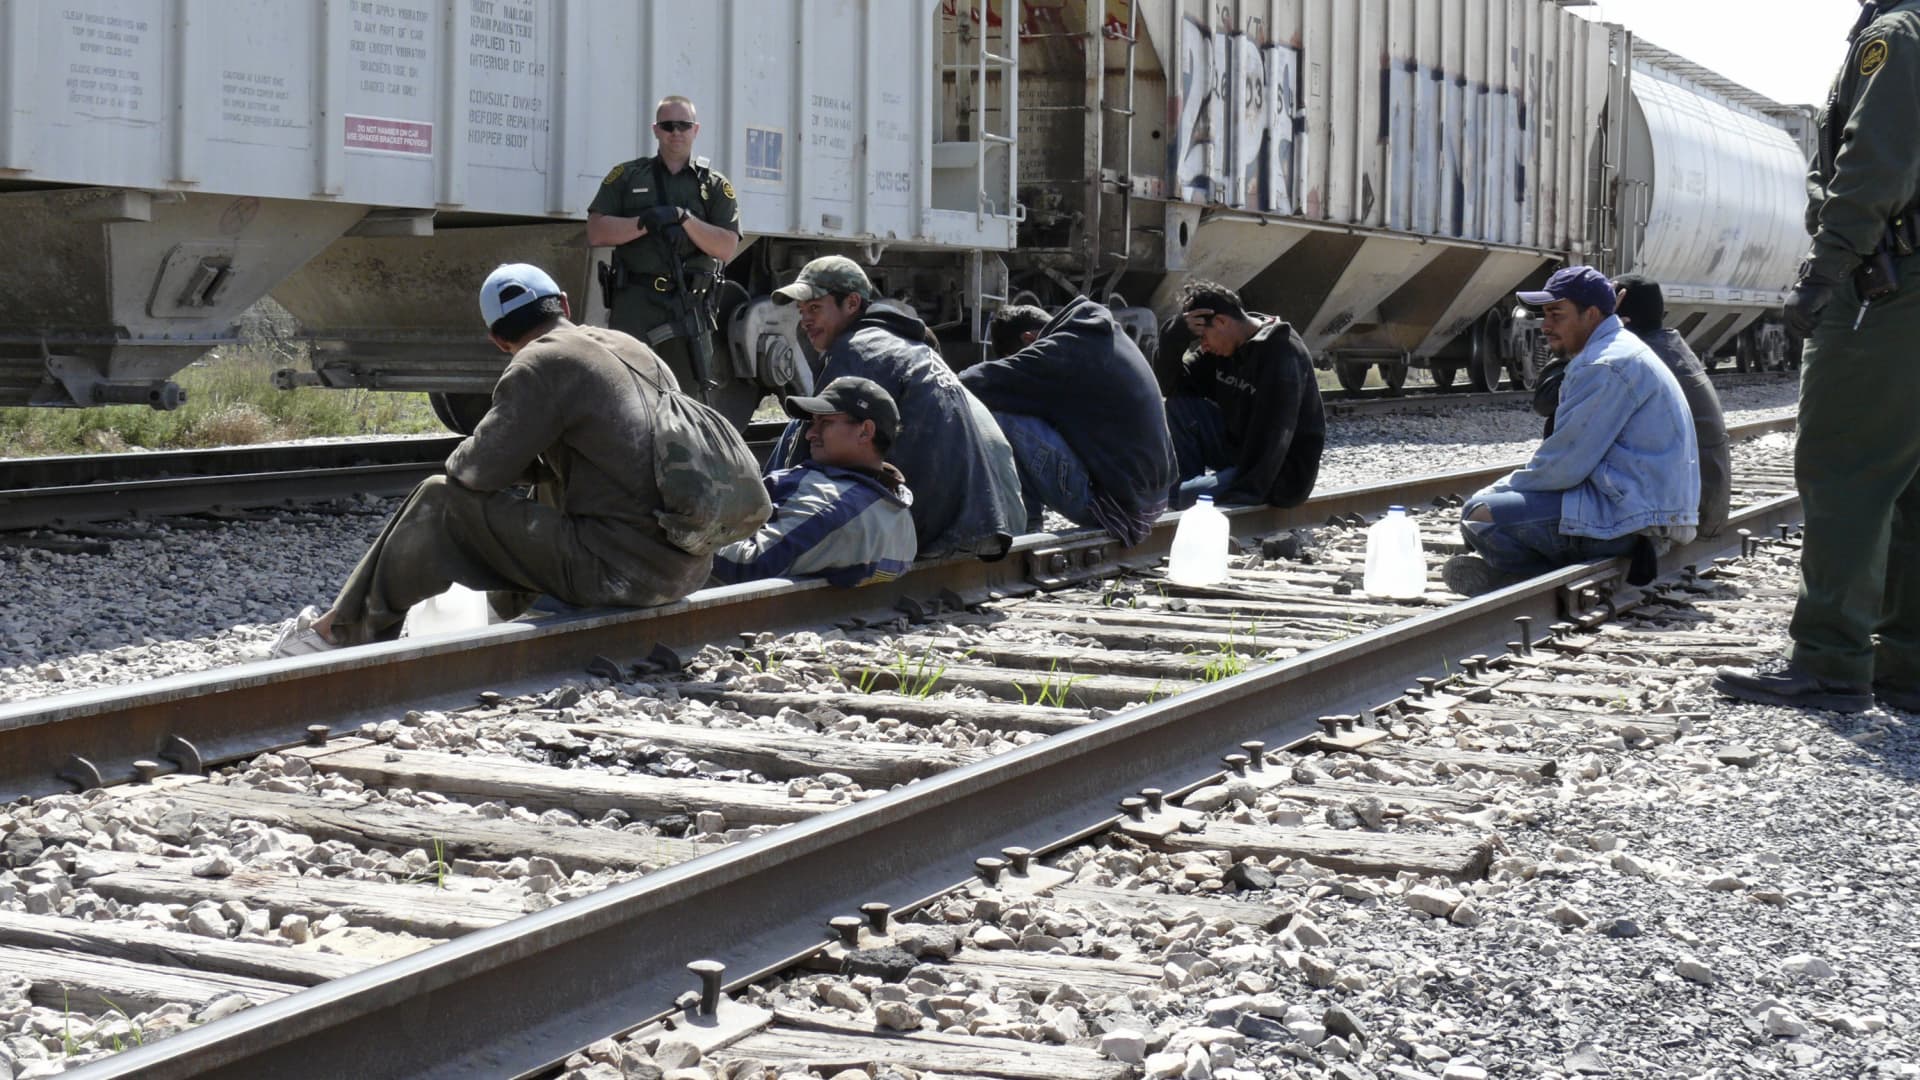 Over a half-billion dollars in rail freight stuck at Texas border